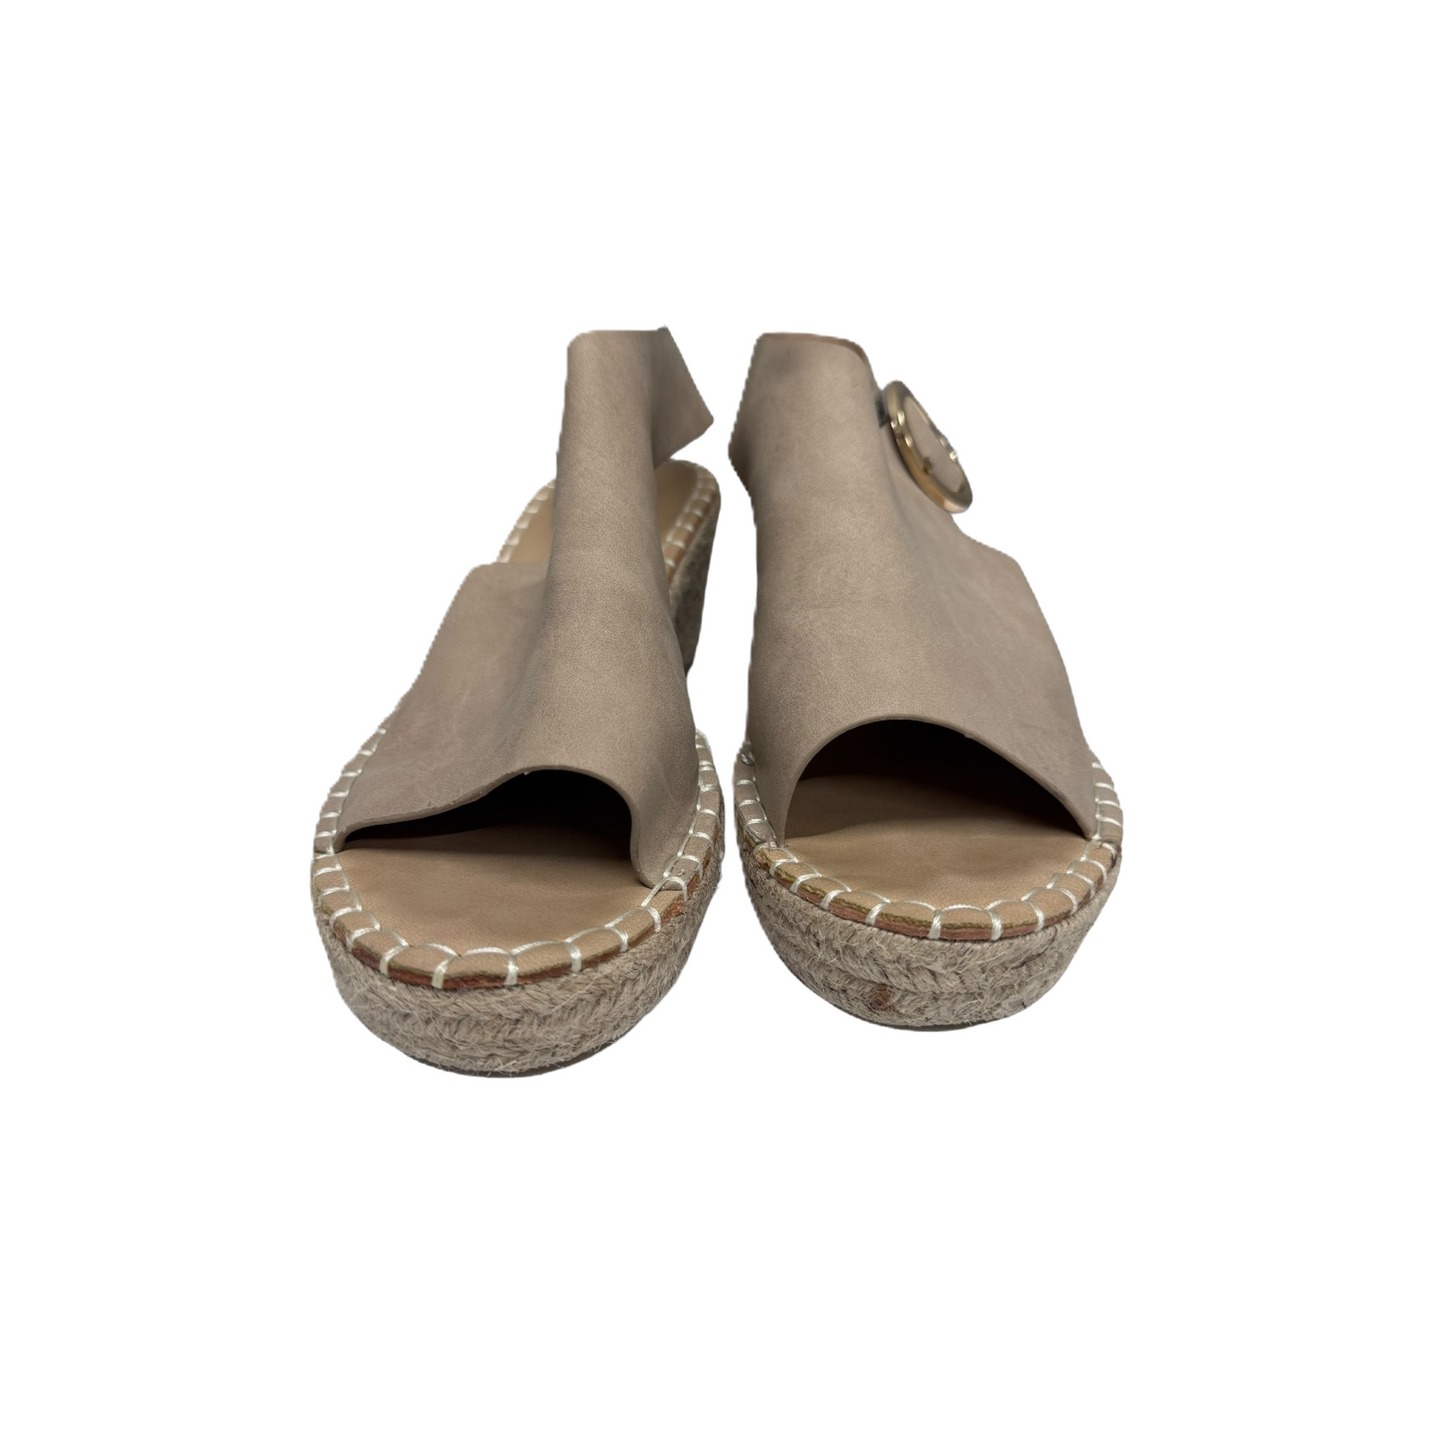 Sandals Heels Wedge By Catherine Malandrino  Size: 8